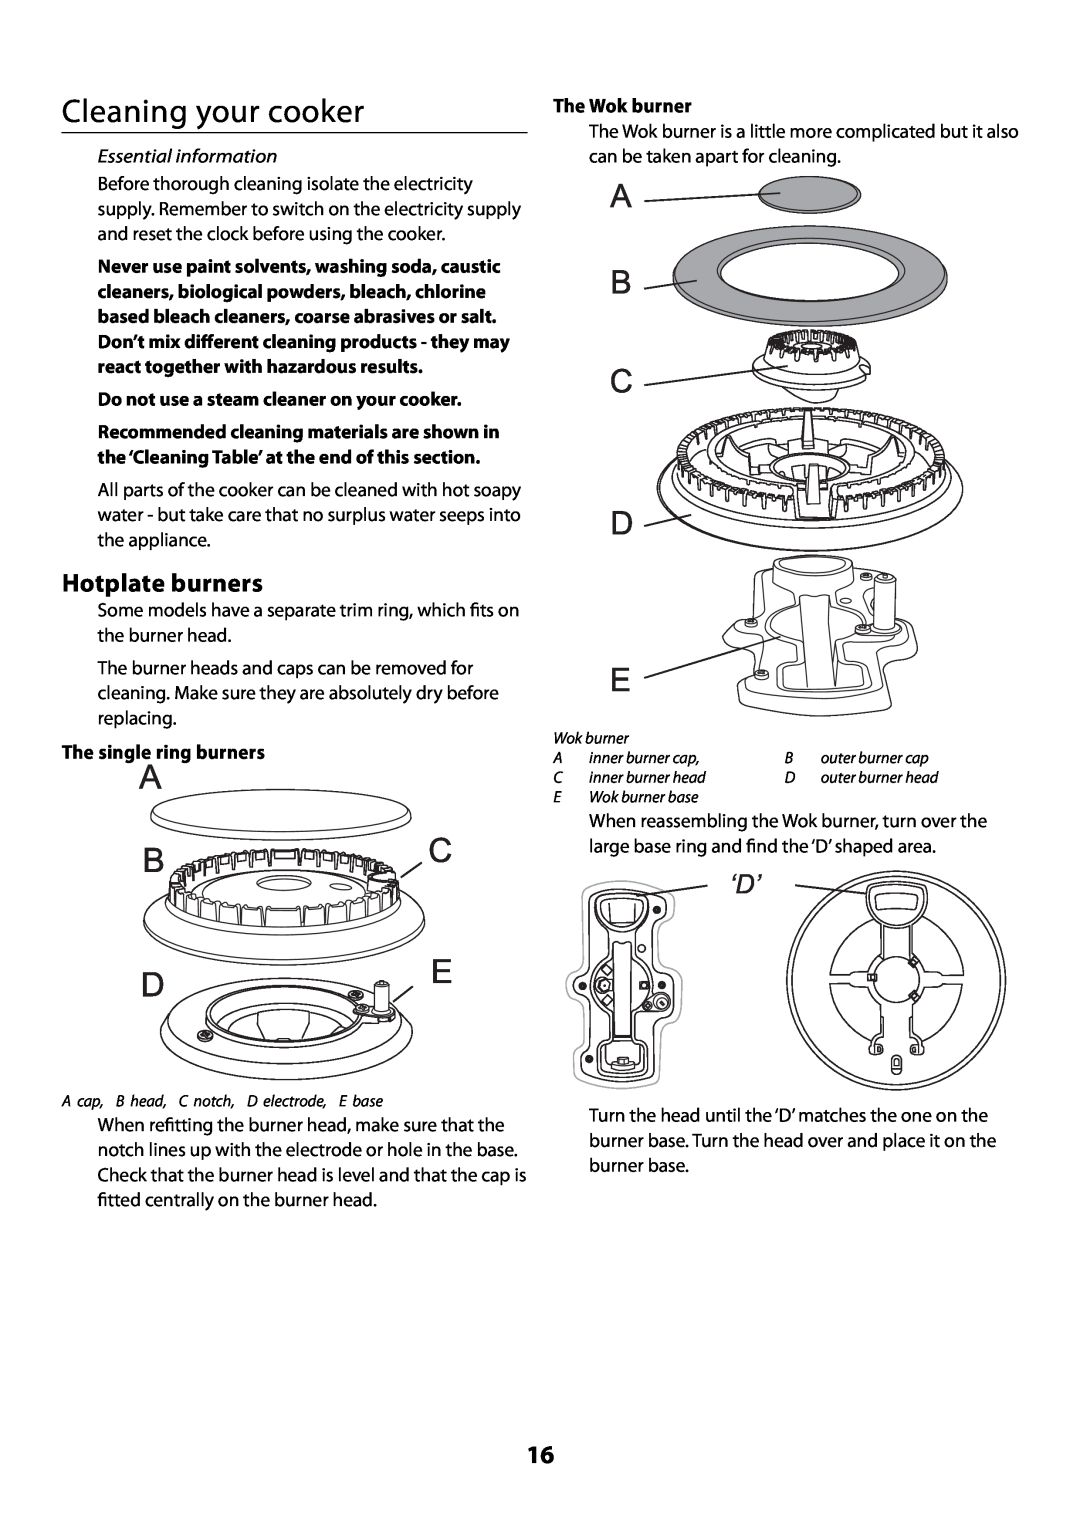 Rangemaster U109300 - 01 manual Cleaning your cooker, Hotplate burners, The single ring burners, The Wok burner 